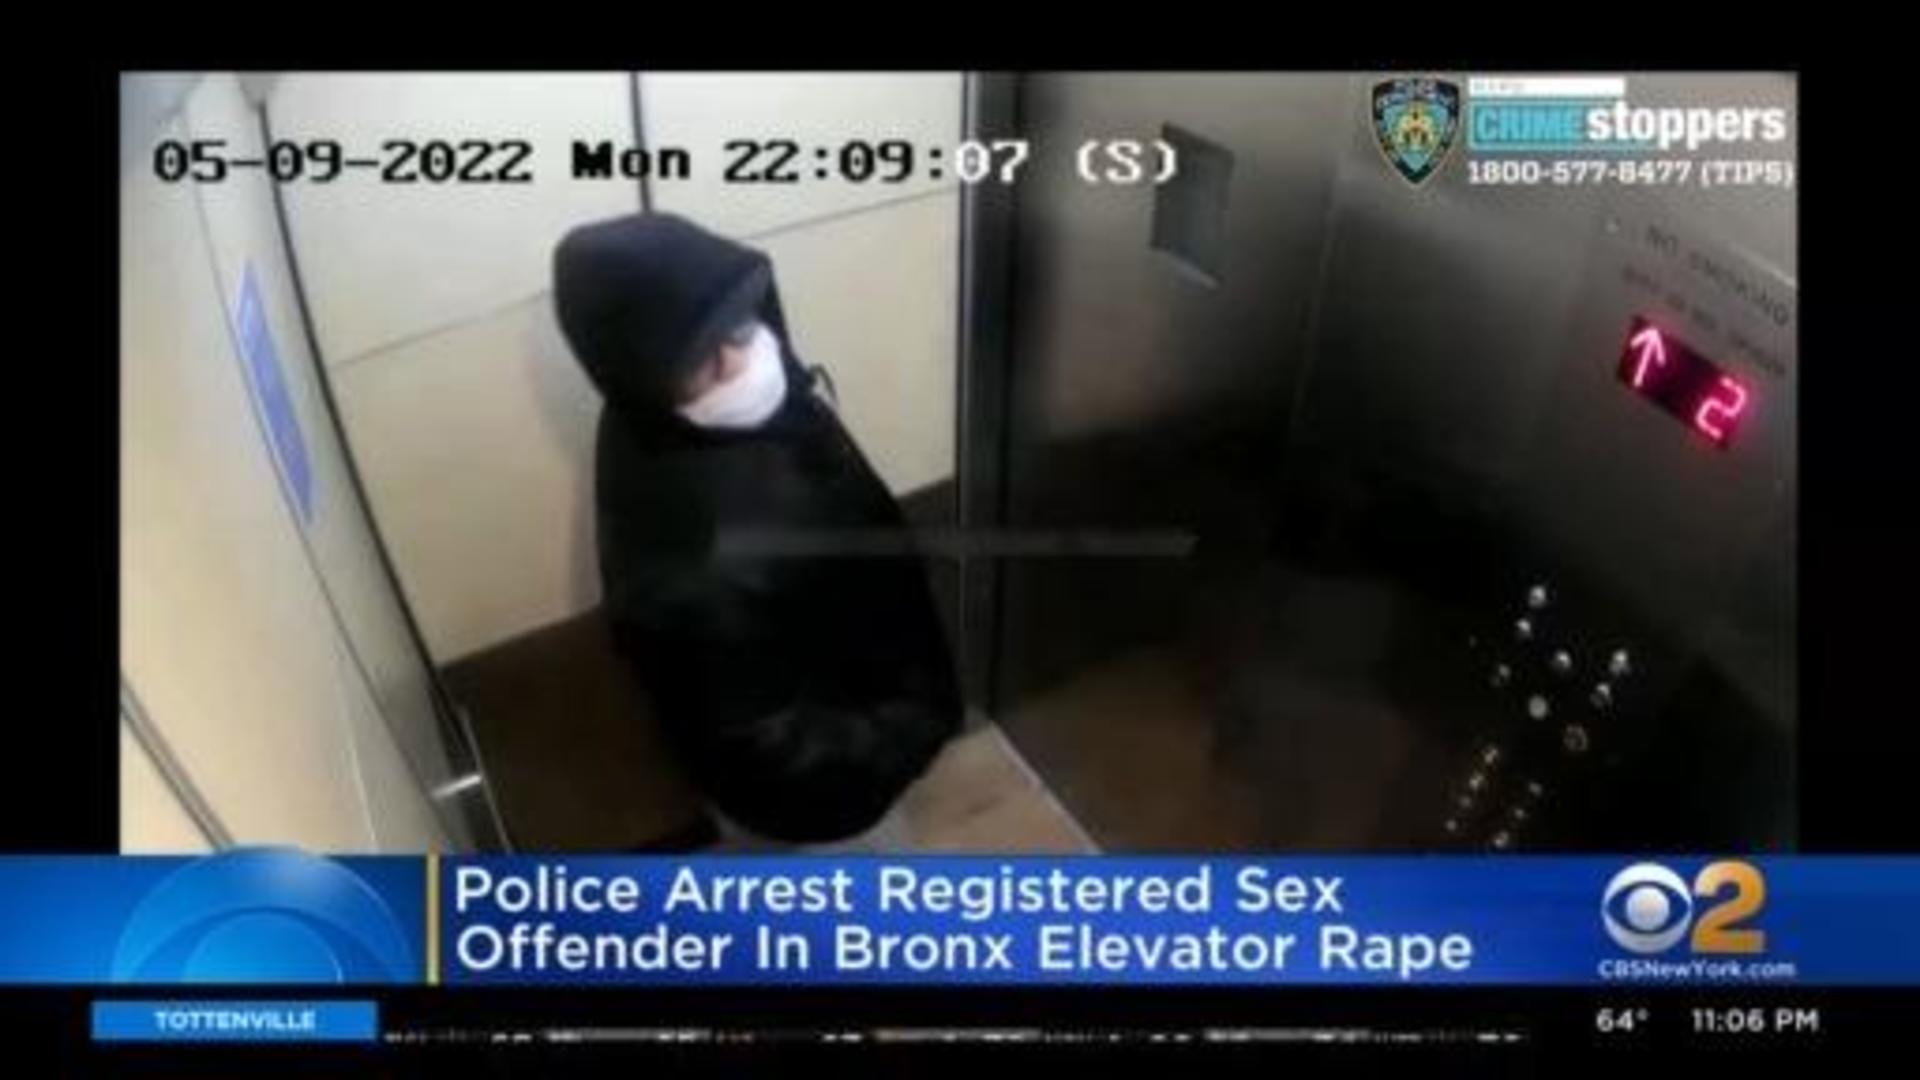 Party Raped Sex Videos - Police arrest registered sex offender in Bronx elevator rape - CBS New York